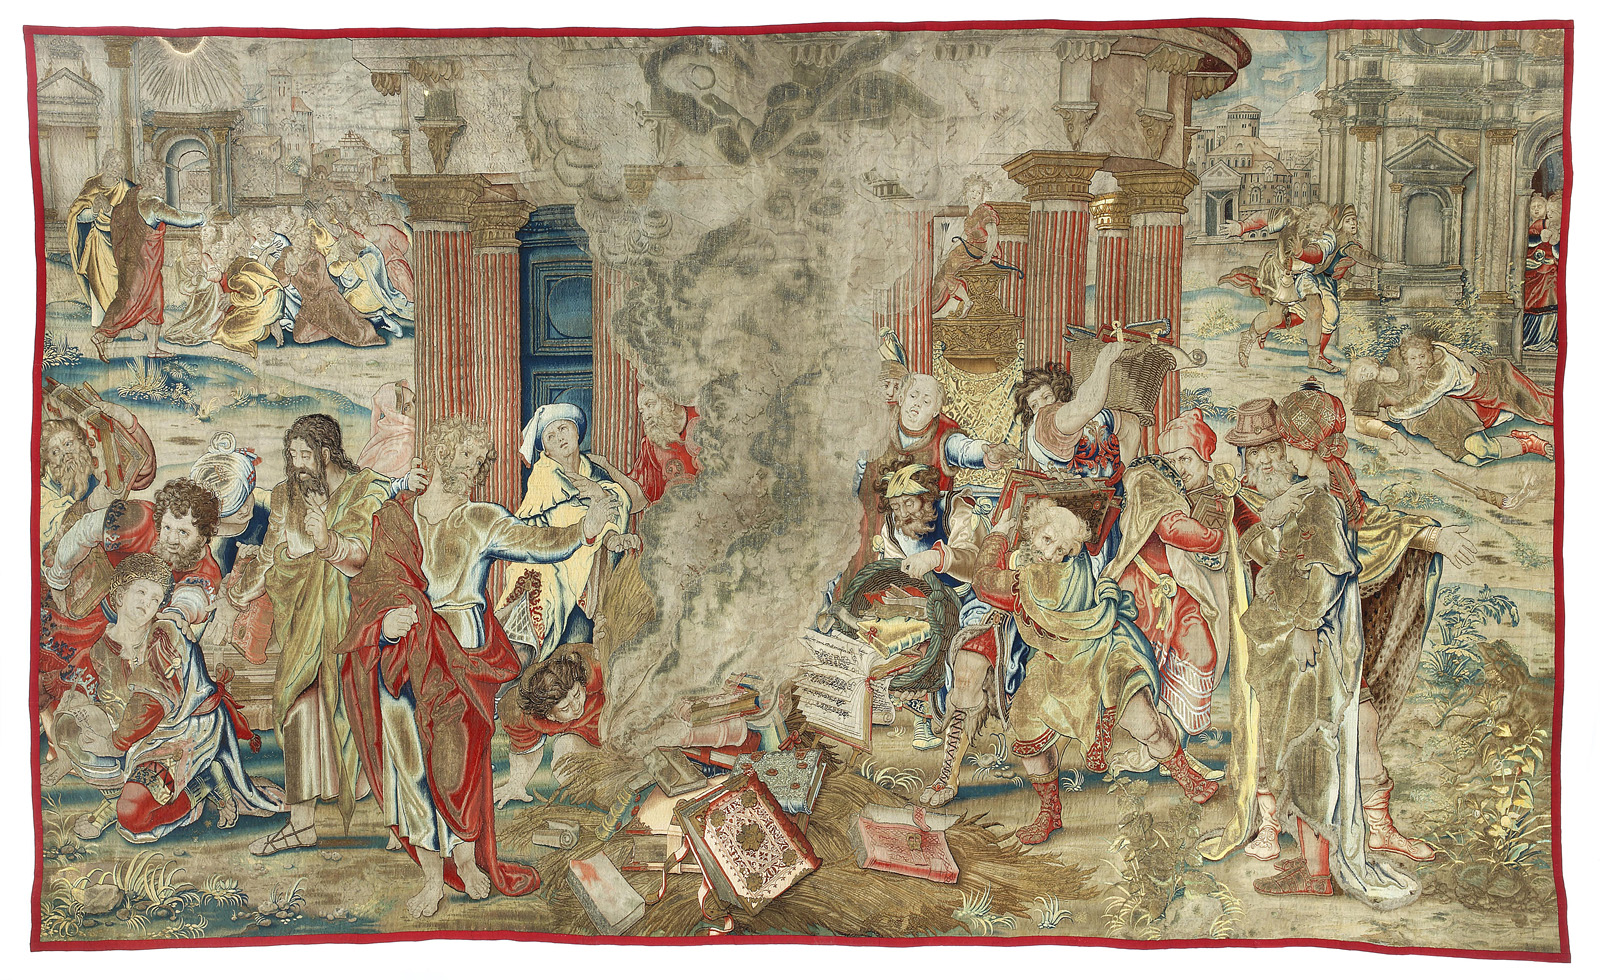 Saint Paul Directing the Burning of the Heathen Books at Ephesus